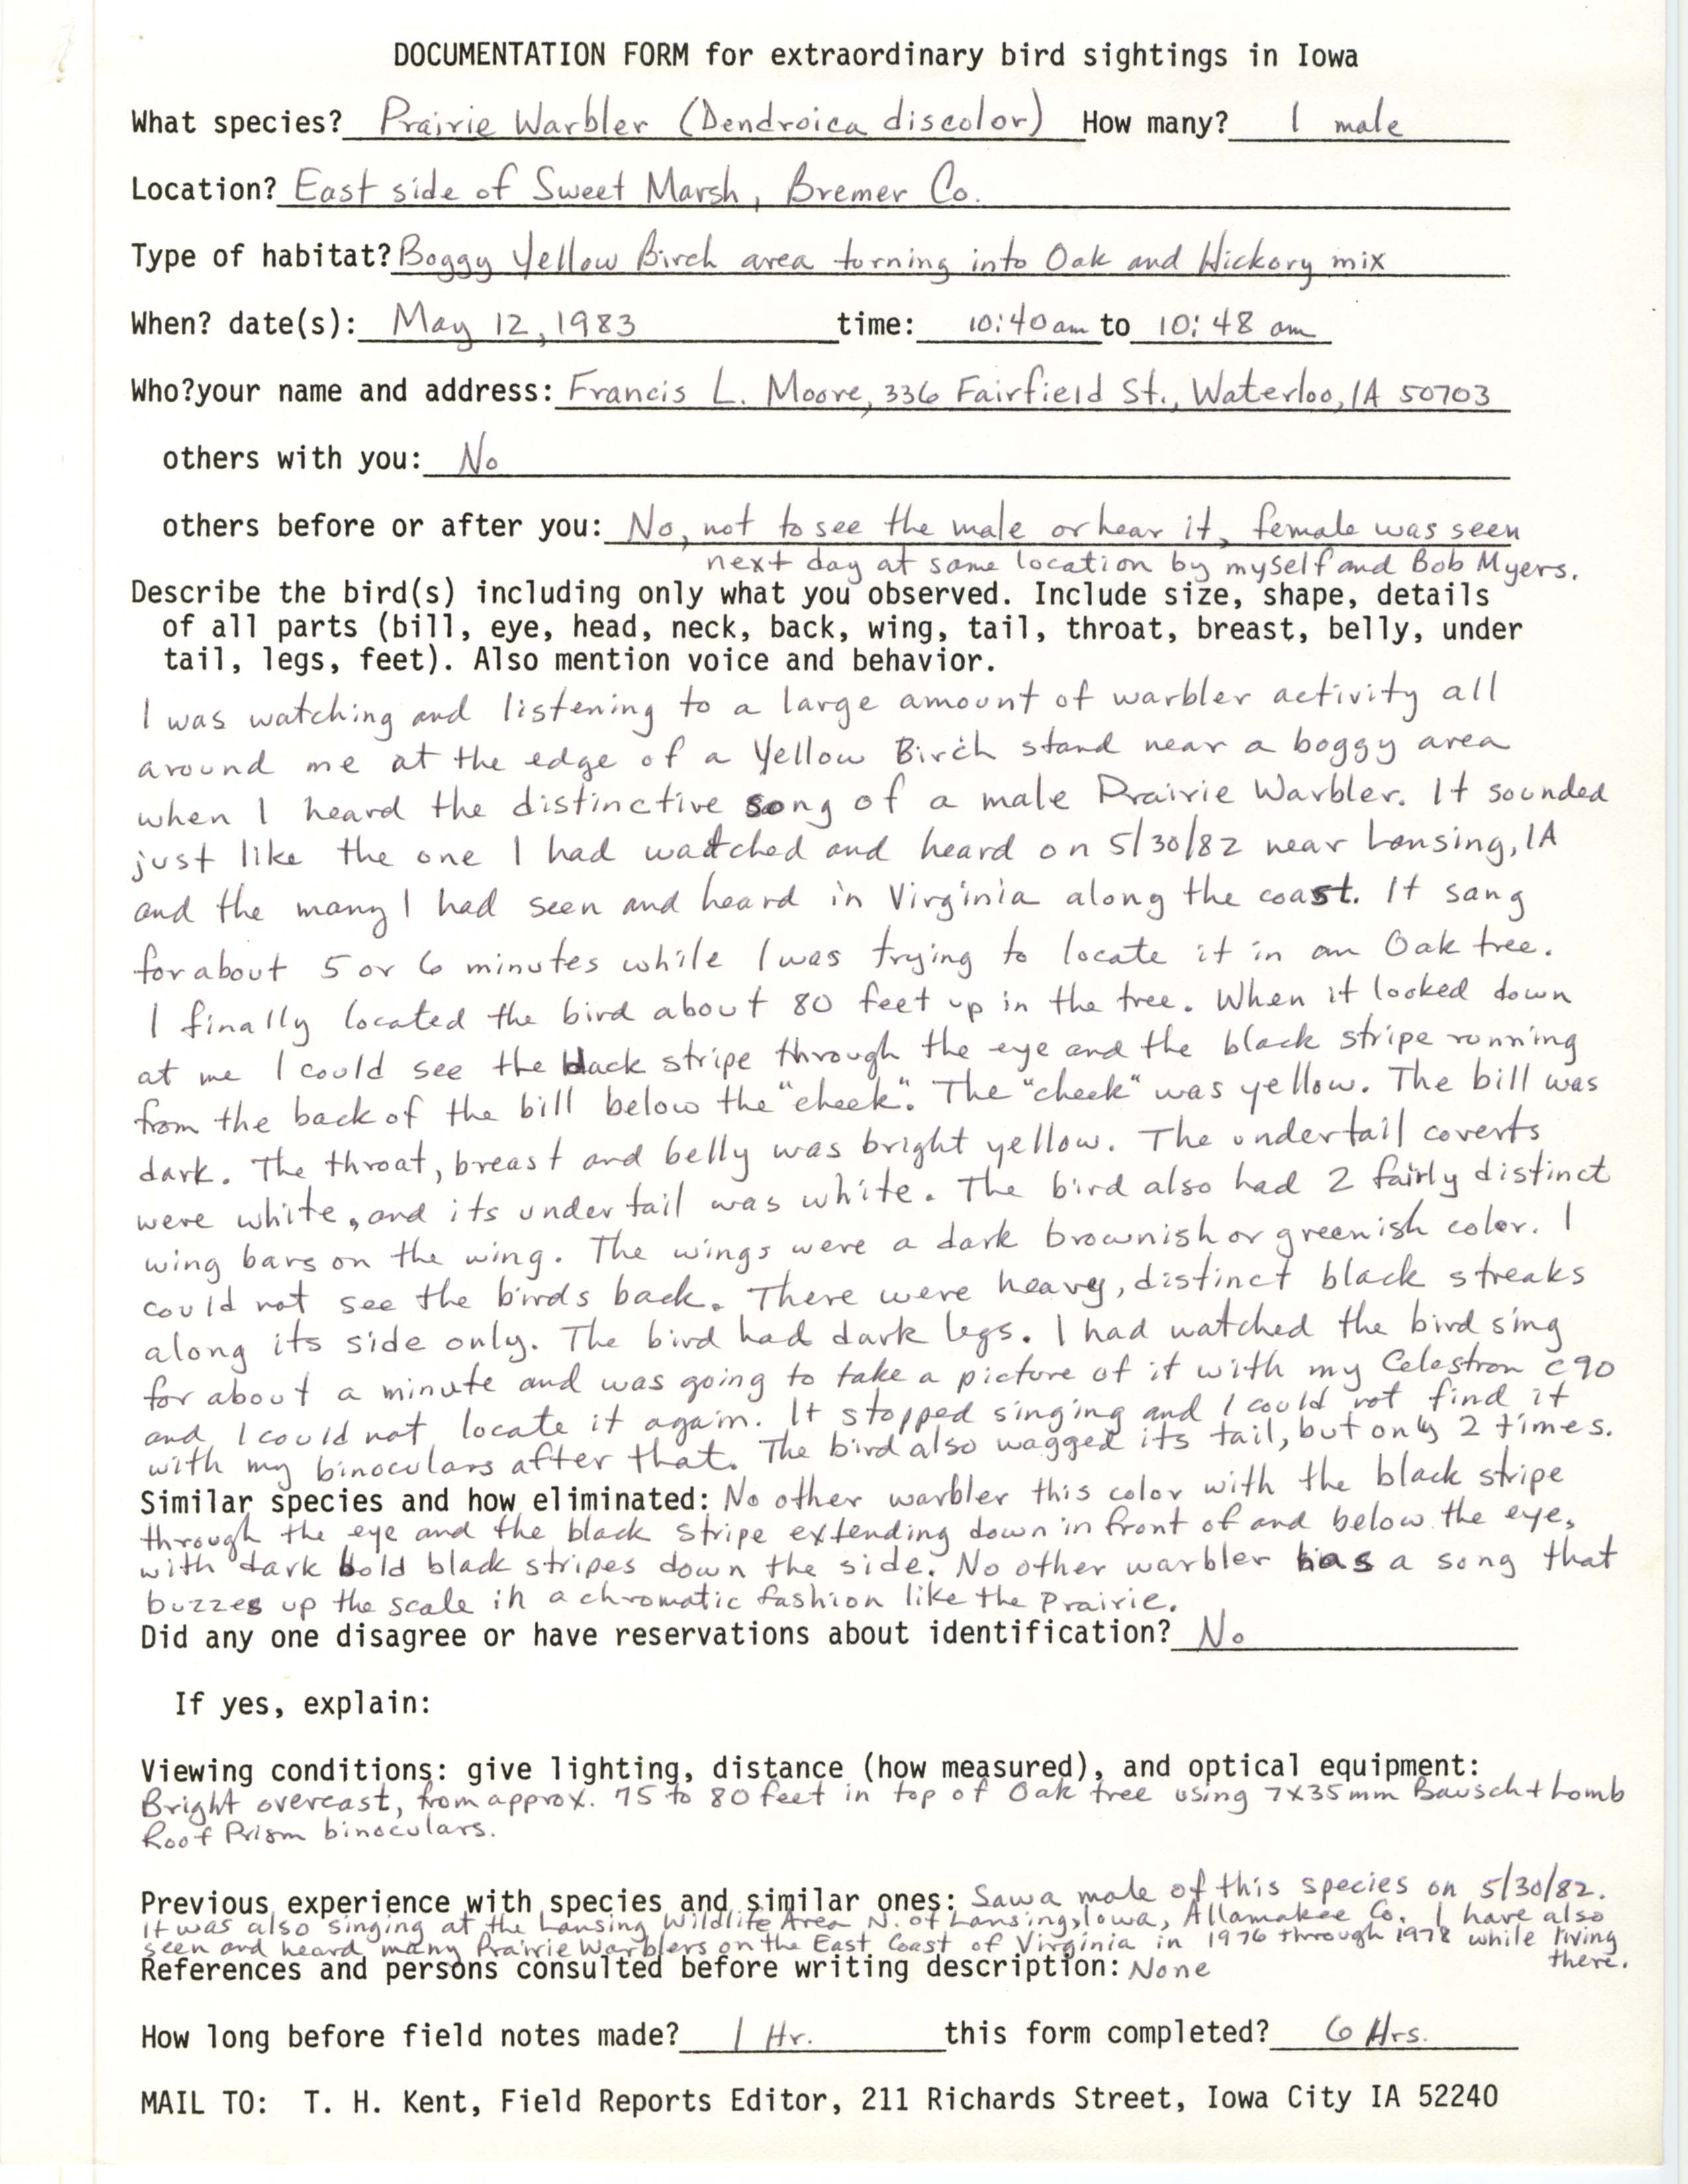 Rare bird documentation form for Prairie Warbler at Sweet Marsh, 1983